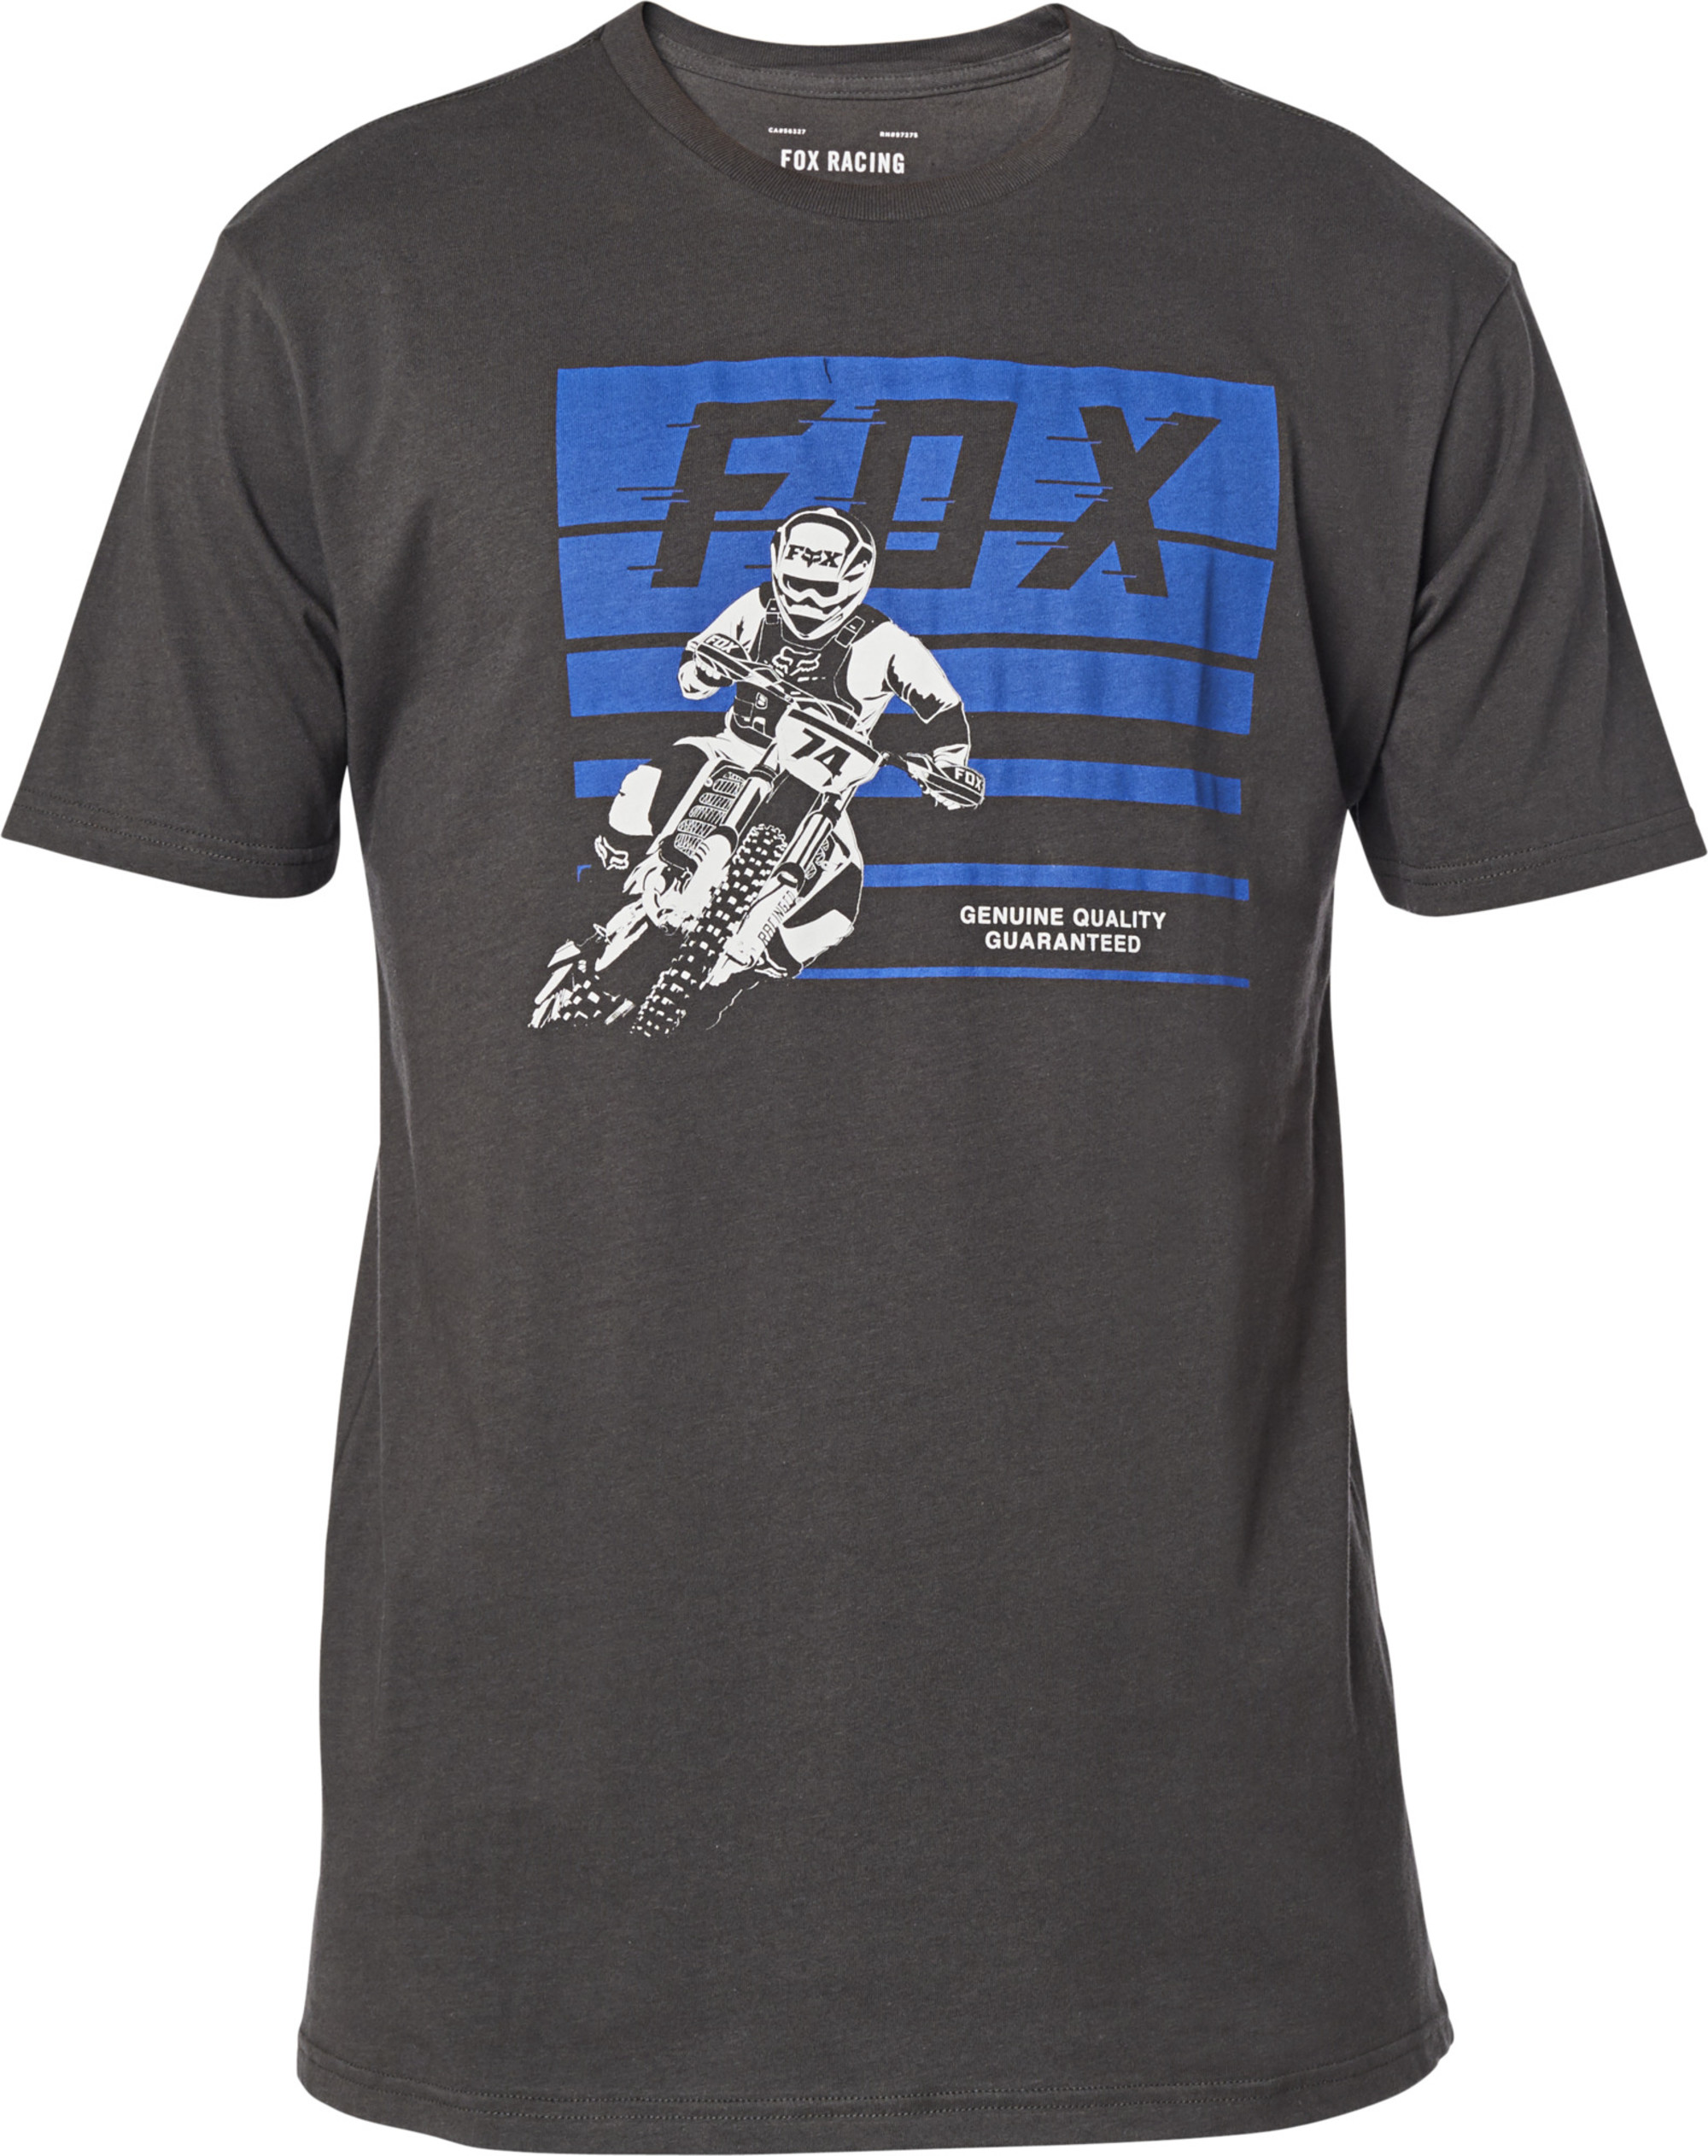 fox racing t-shirt shirts for men premium advantage